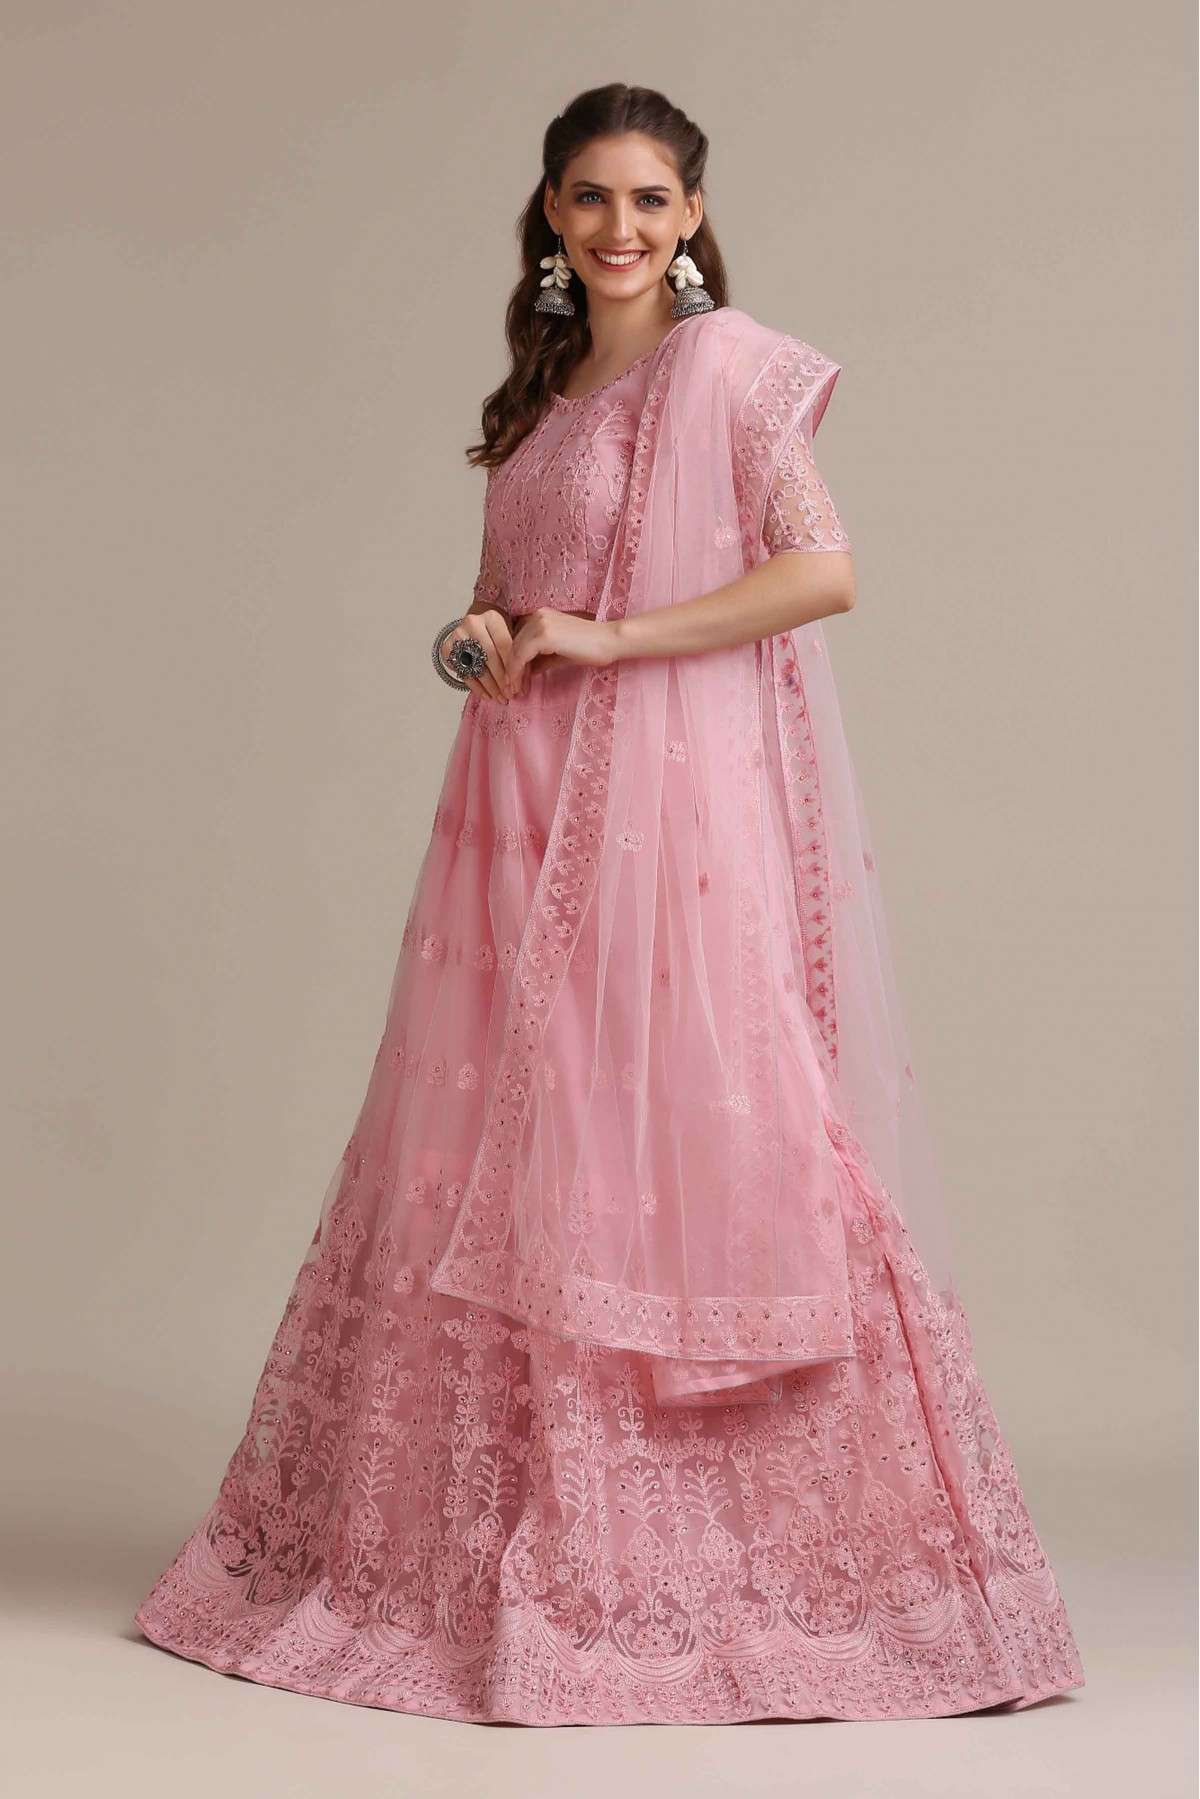 Net Embroidery Lehenga Choli In Light Pink Colour - LD5680366